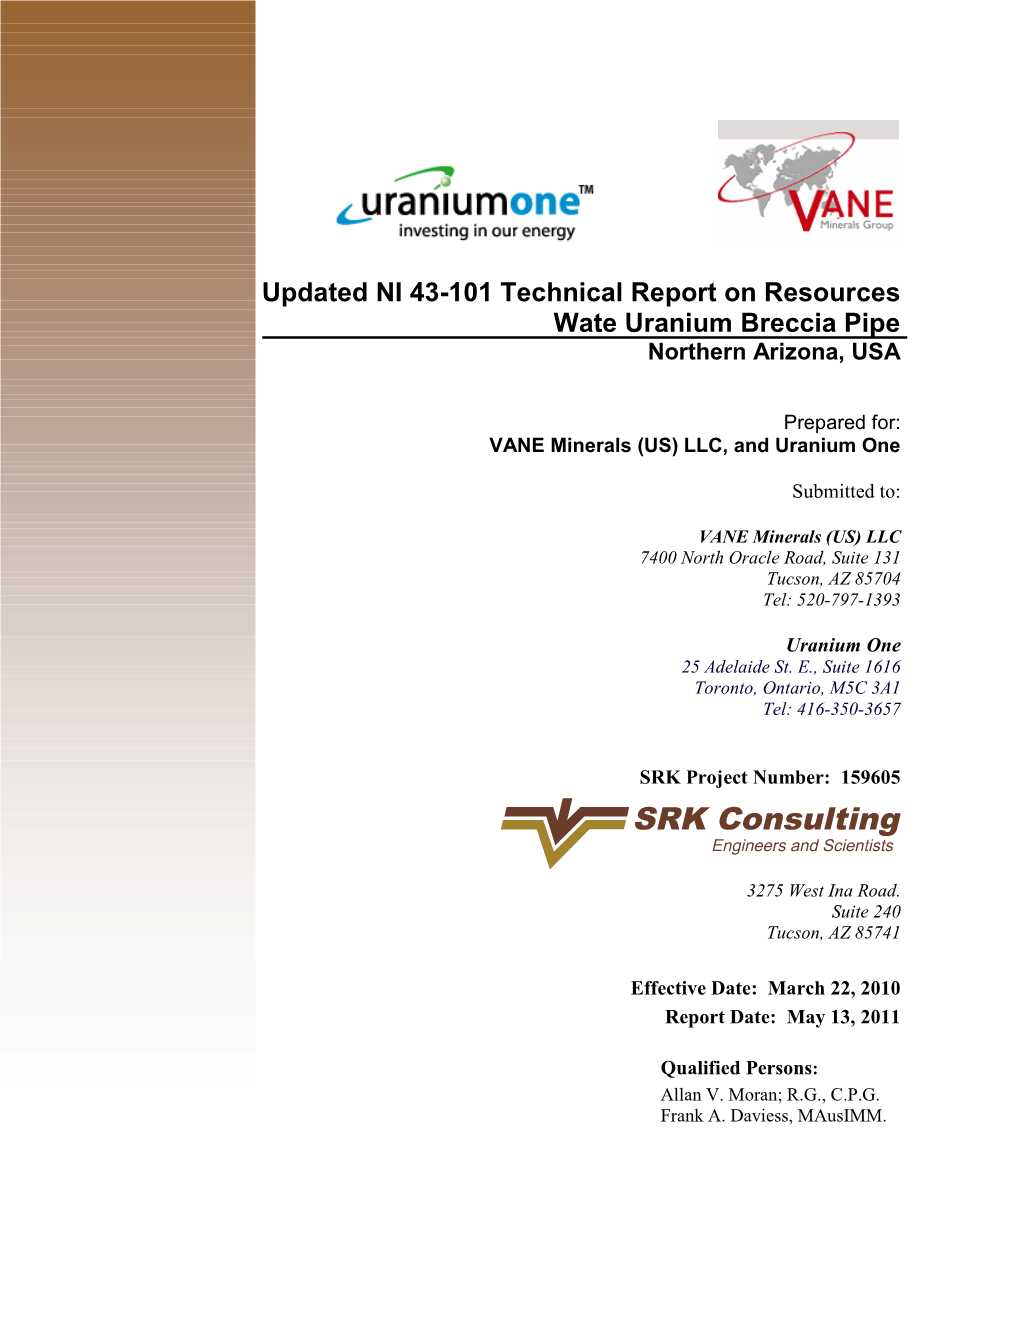 Uranium Breccia Pipe Exploration Project NI 43-101 Technical Report on Resources